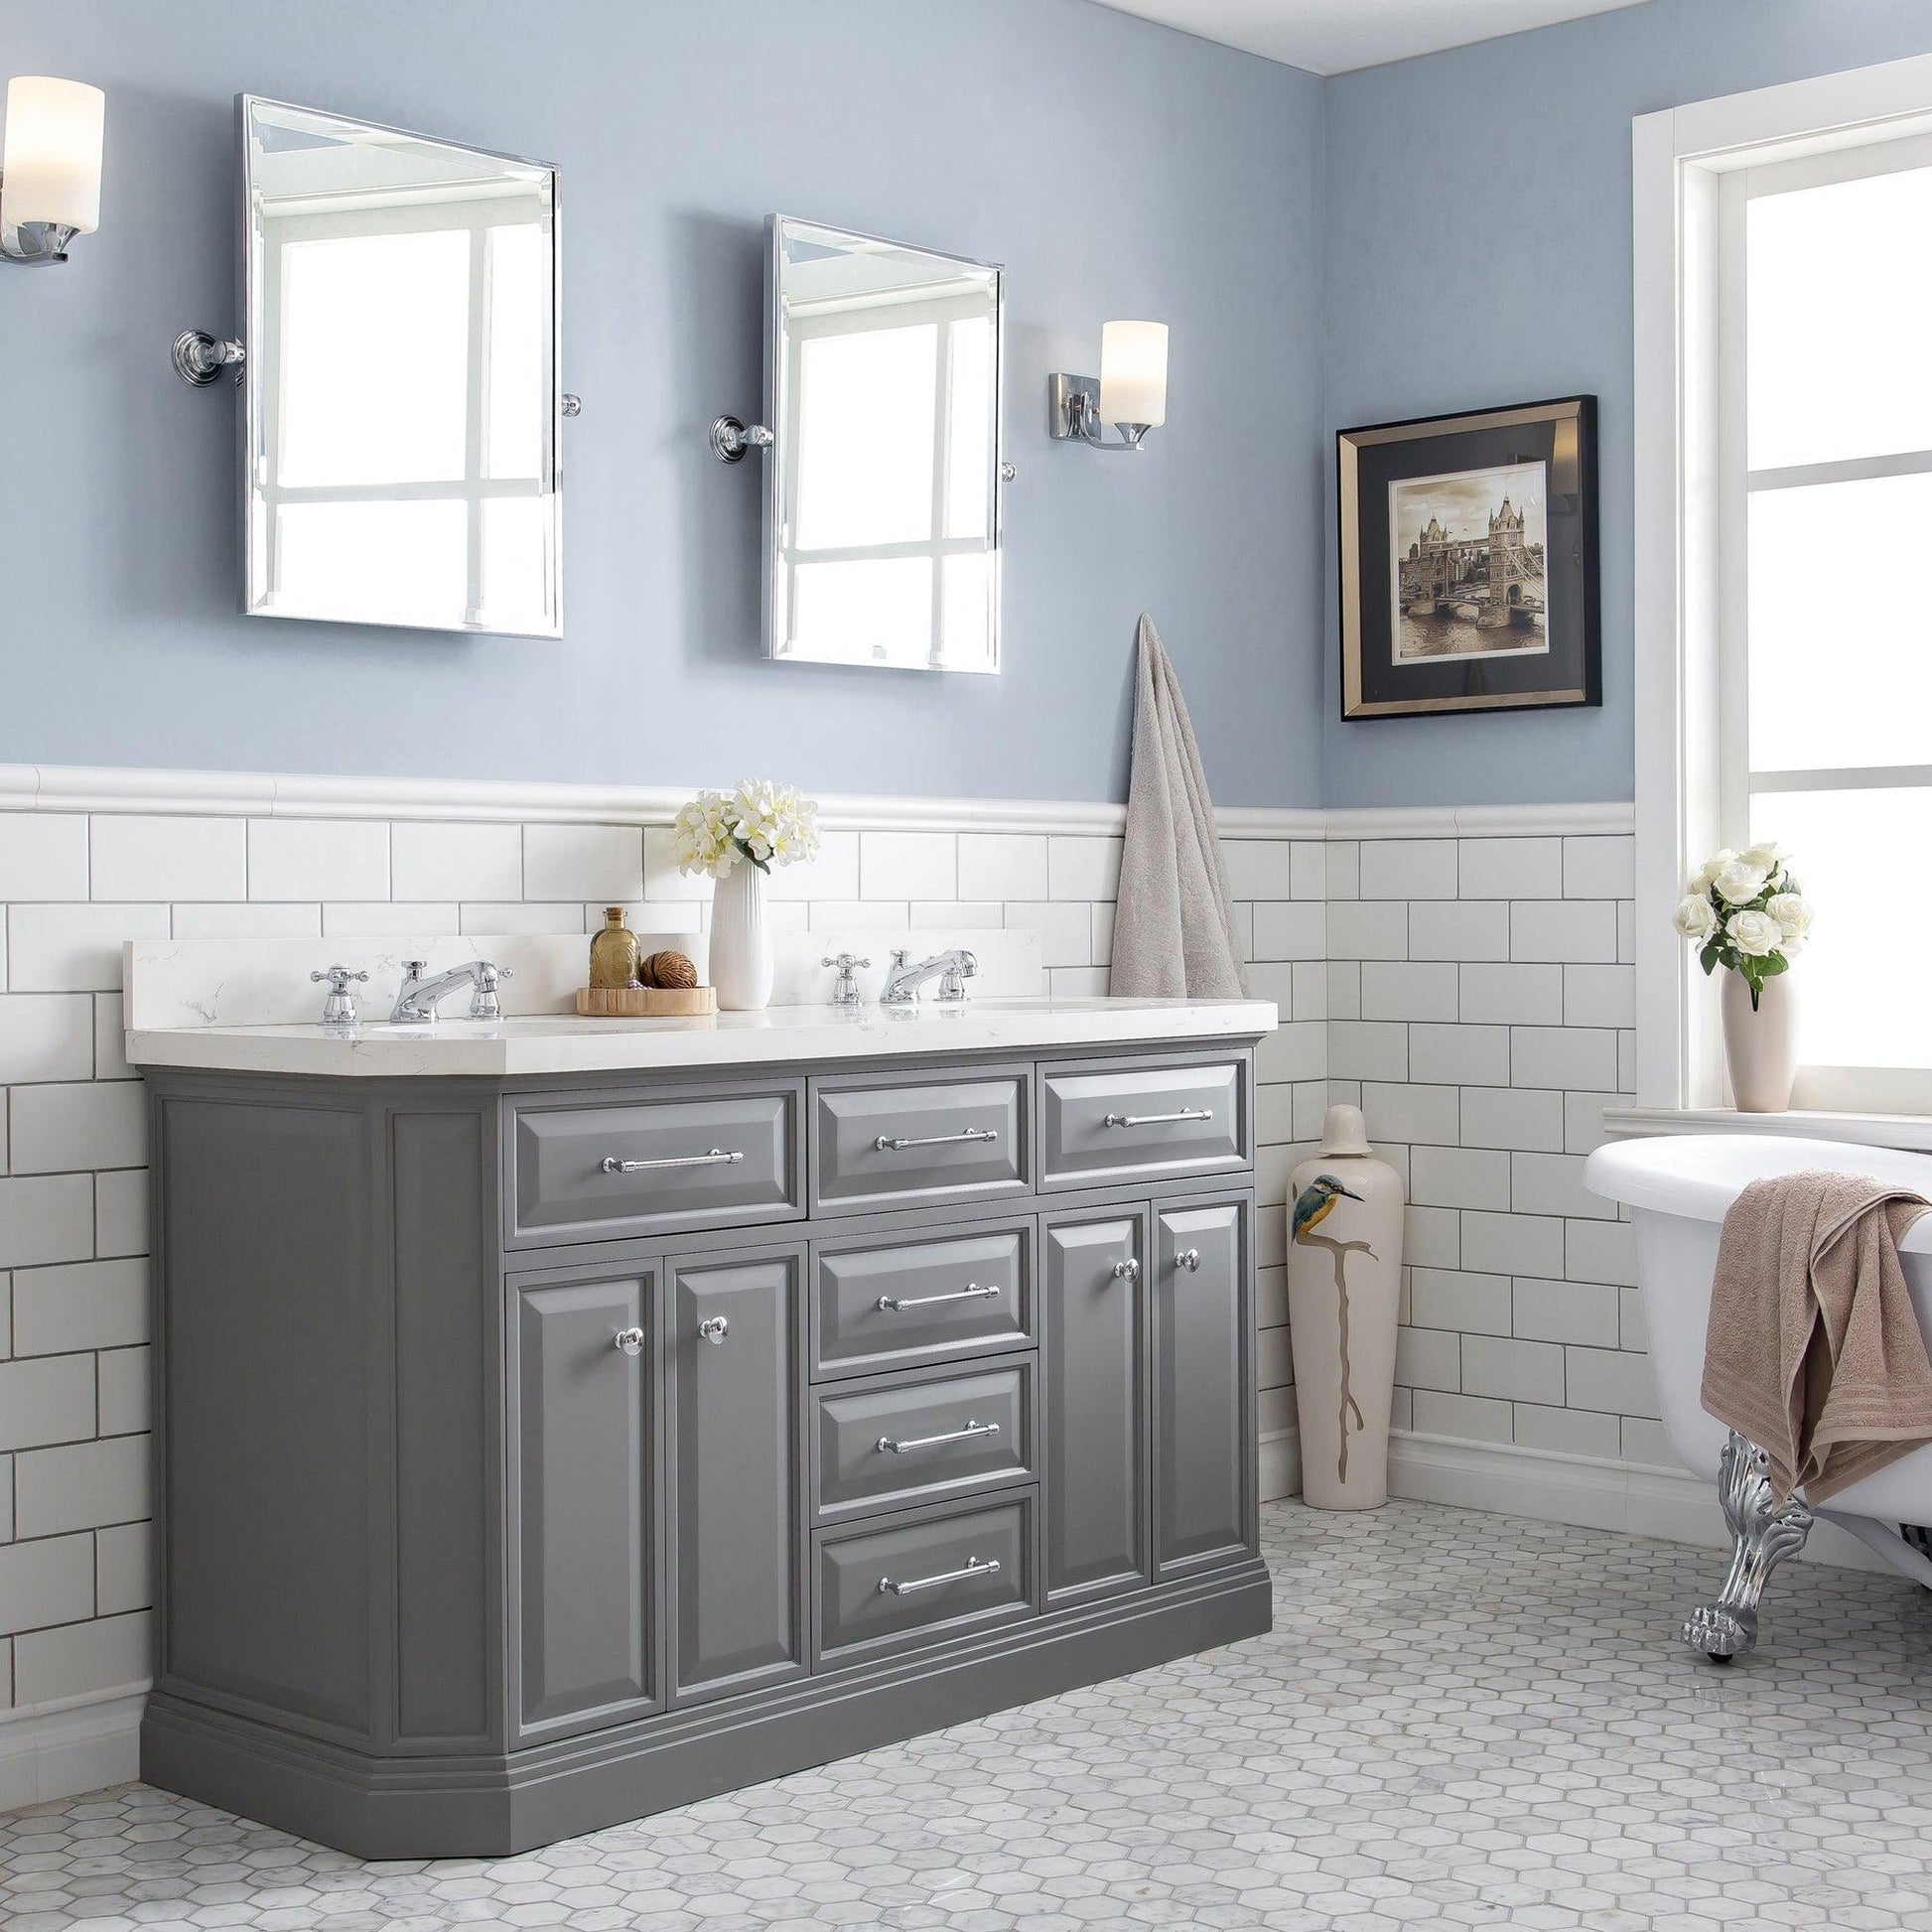 Water Creation Palace 60" Quartz Carrara Cashmere Grey Bathroom Vanity Set With Hardware in Chrome Finish